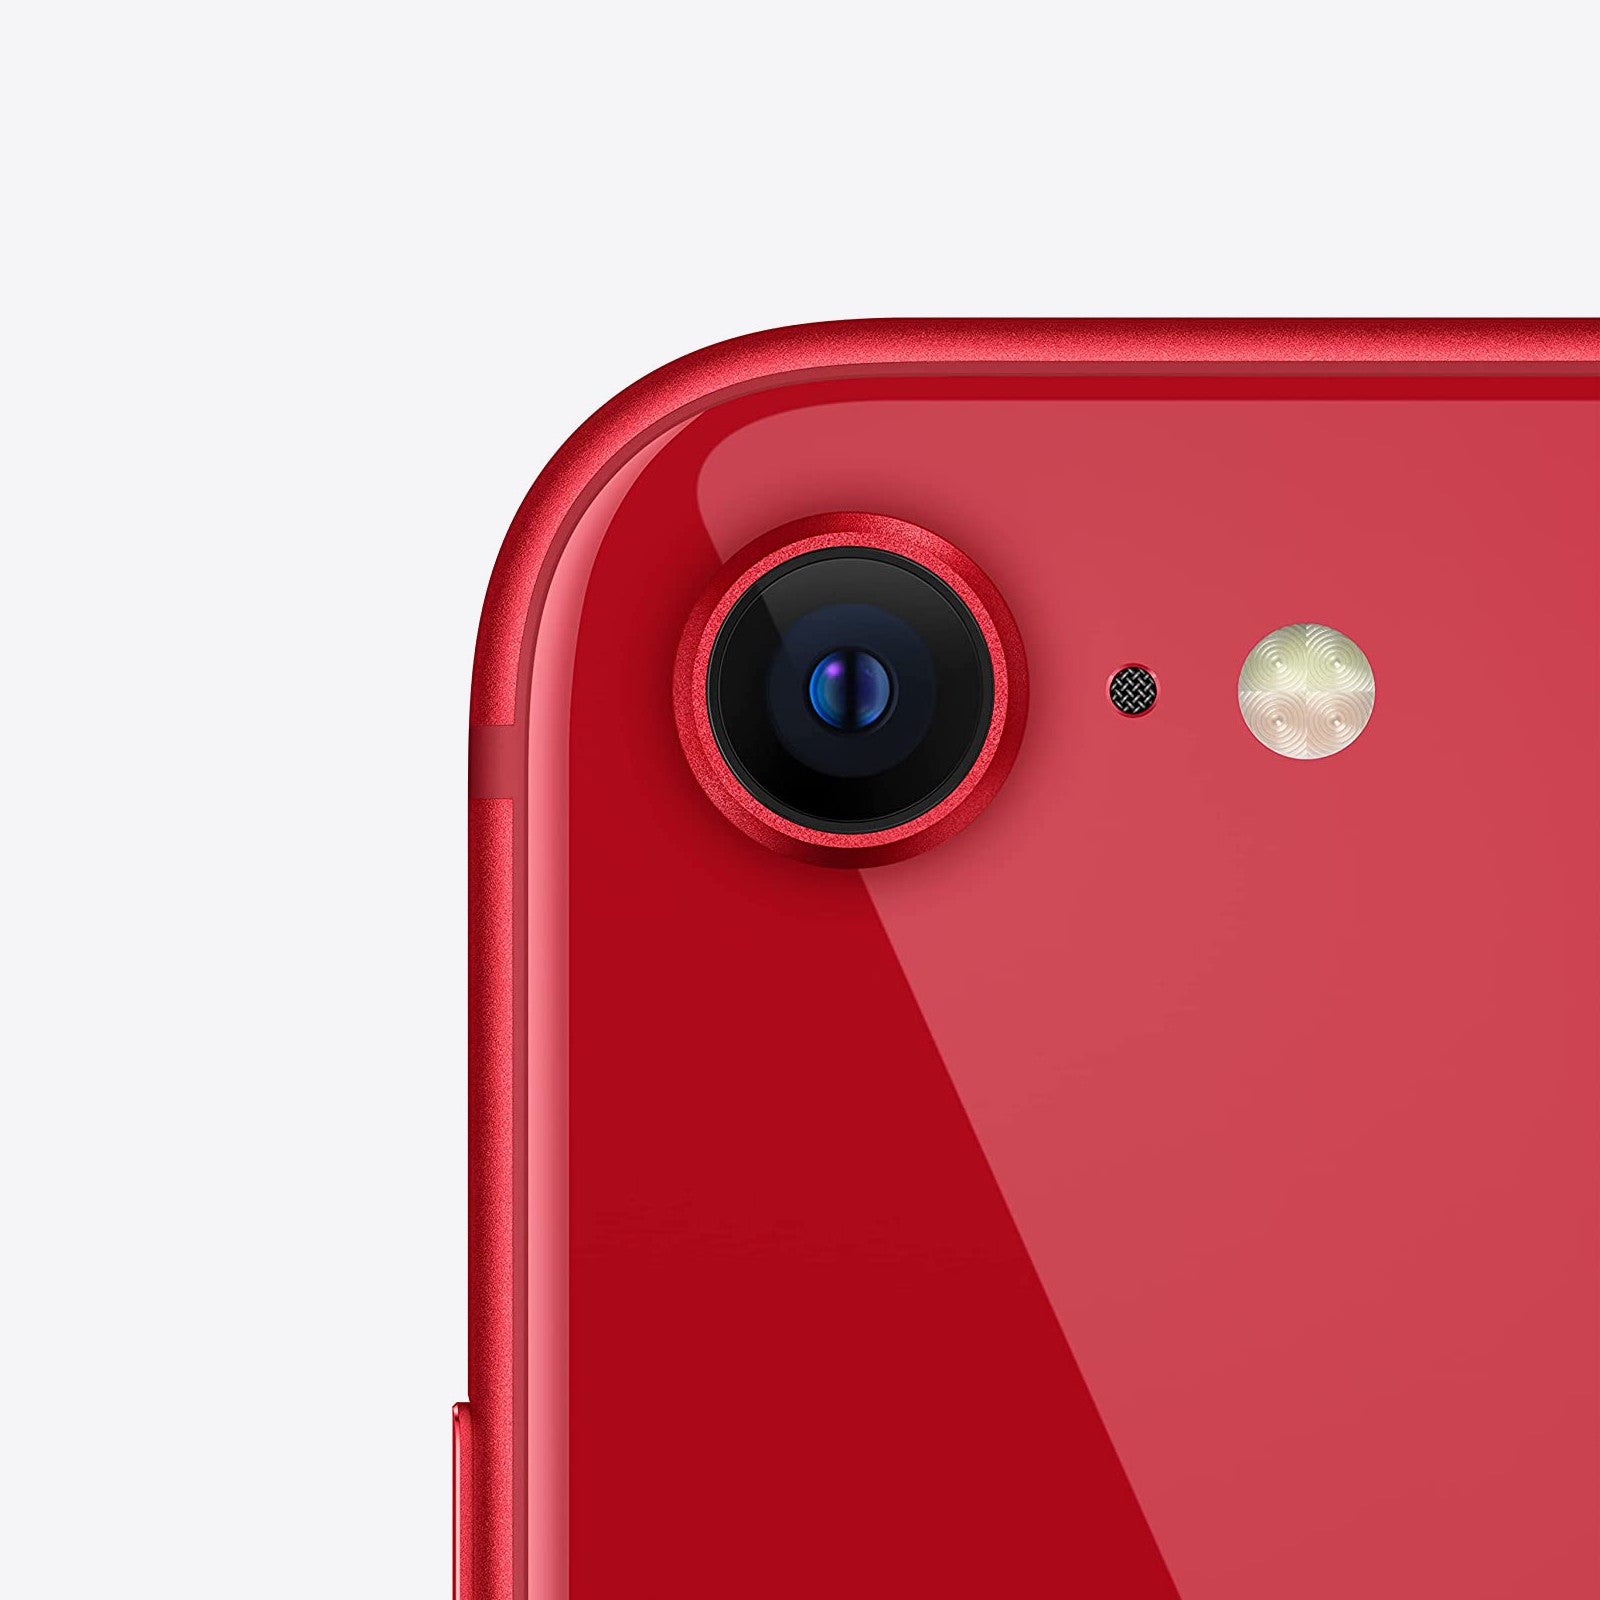 Apple iPhone SE 3rd Gen 64GB Product Red Unlocked Good